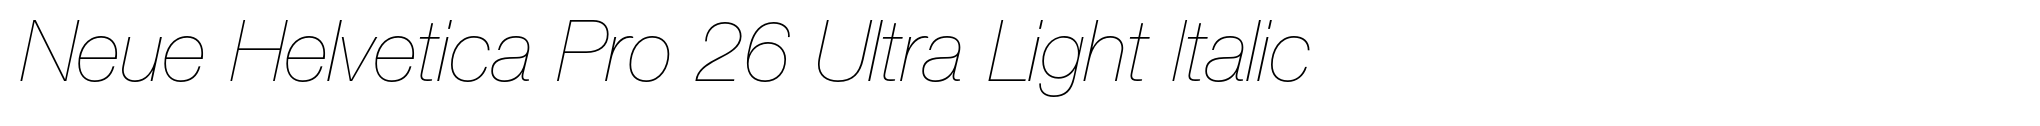 Neue Helvetica Pro 26 Ultra Light Italic image